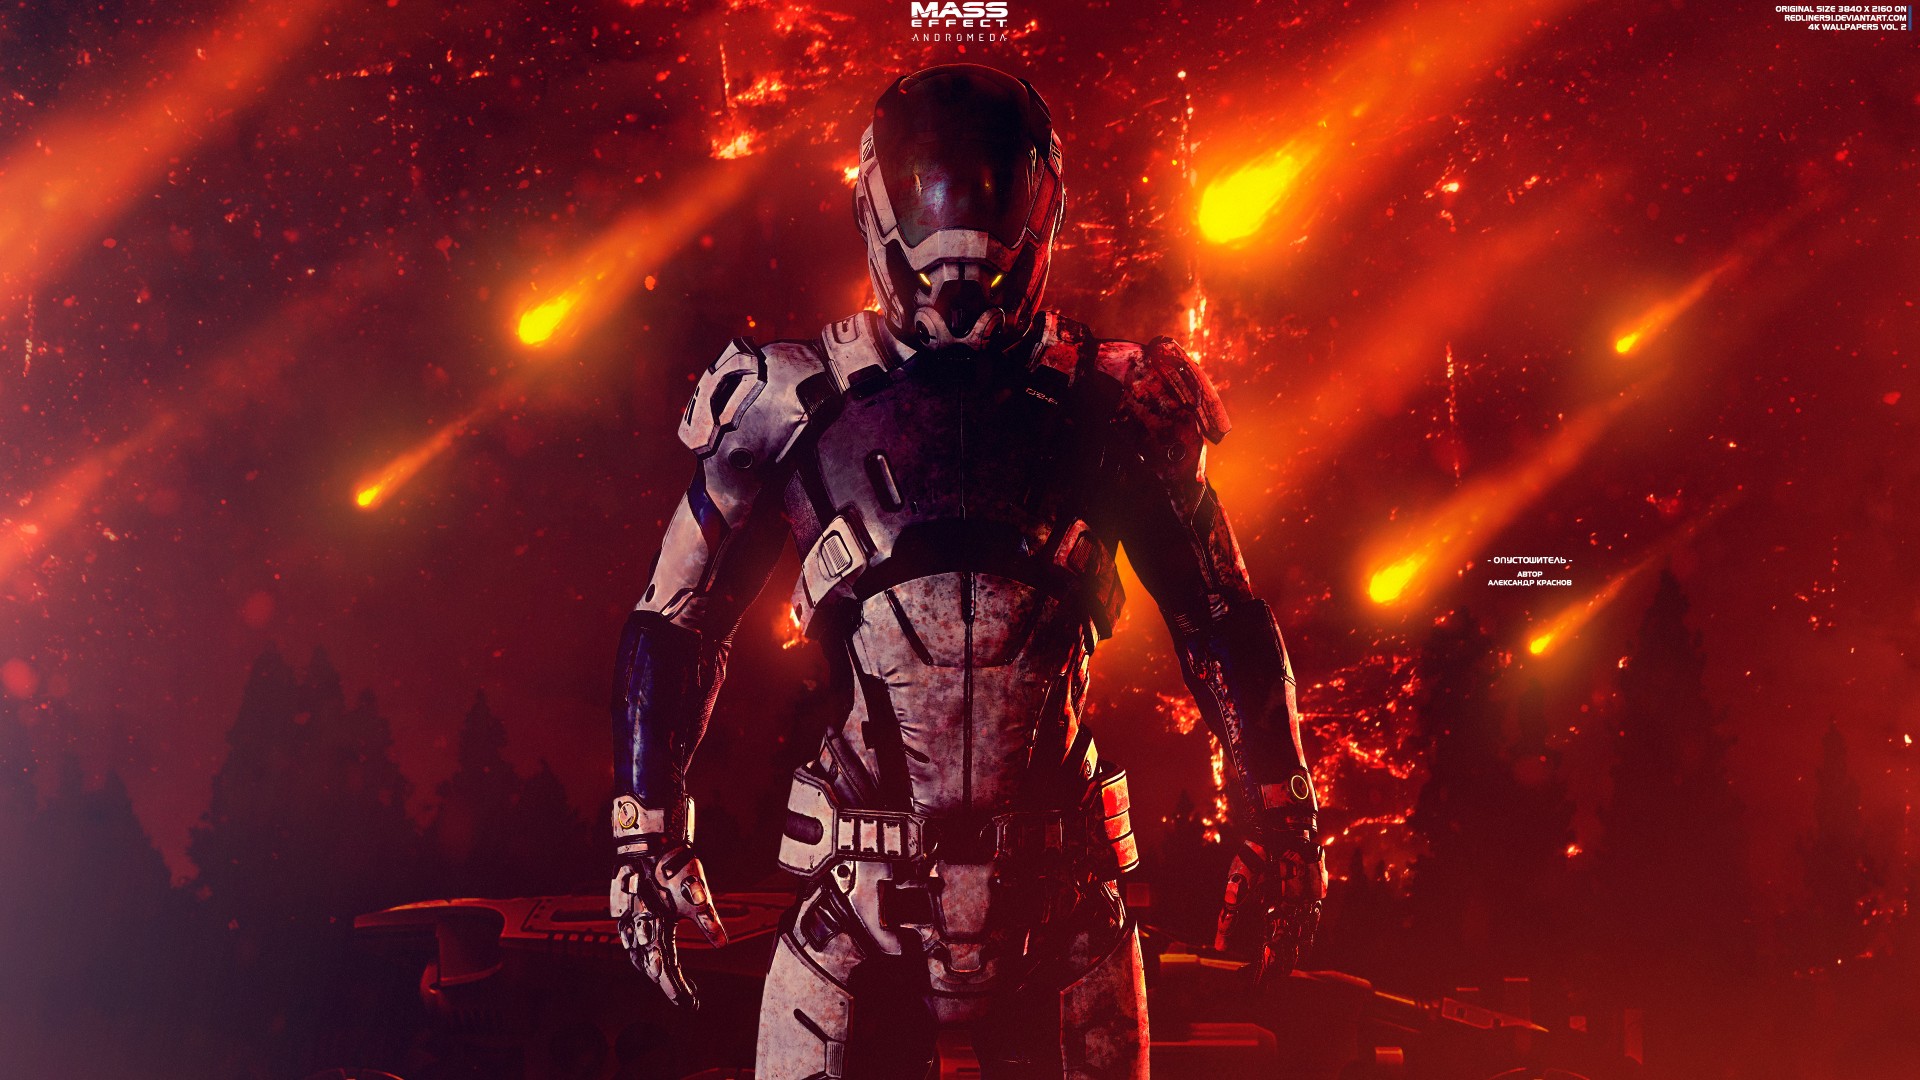 mass effect andromeda desktop wallpaper,fictional character,superhero,space,screenshot,movie